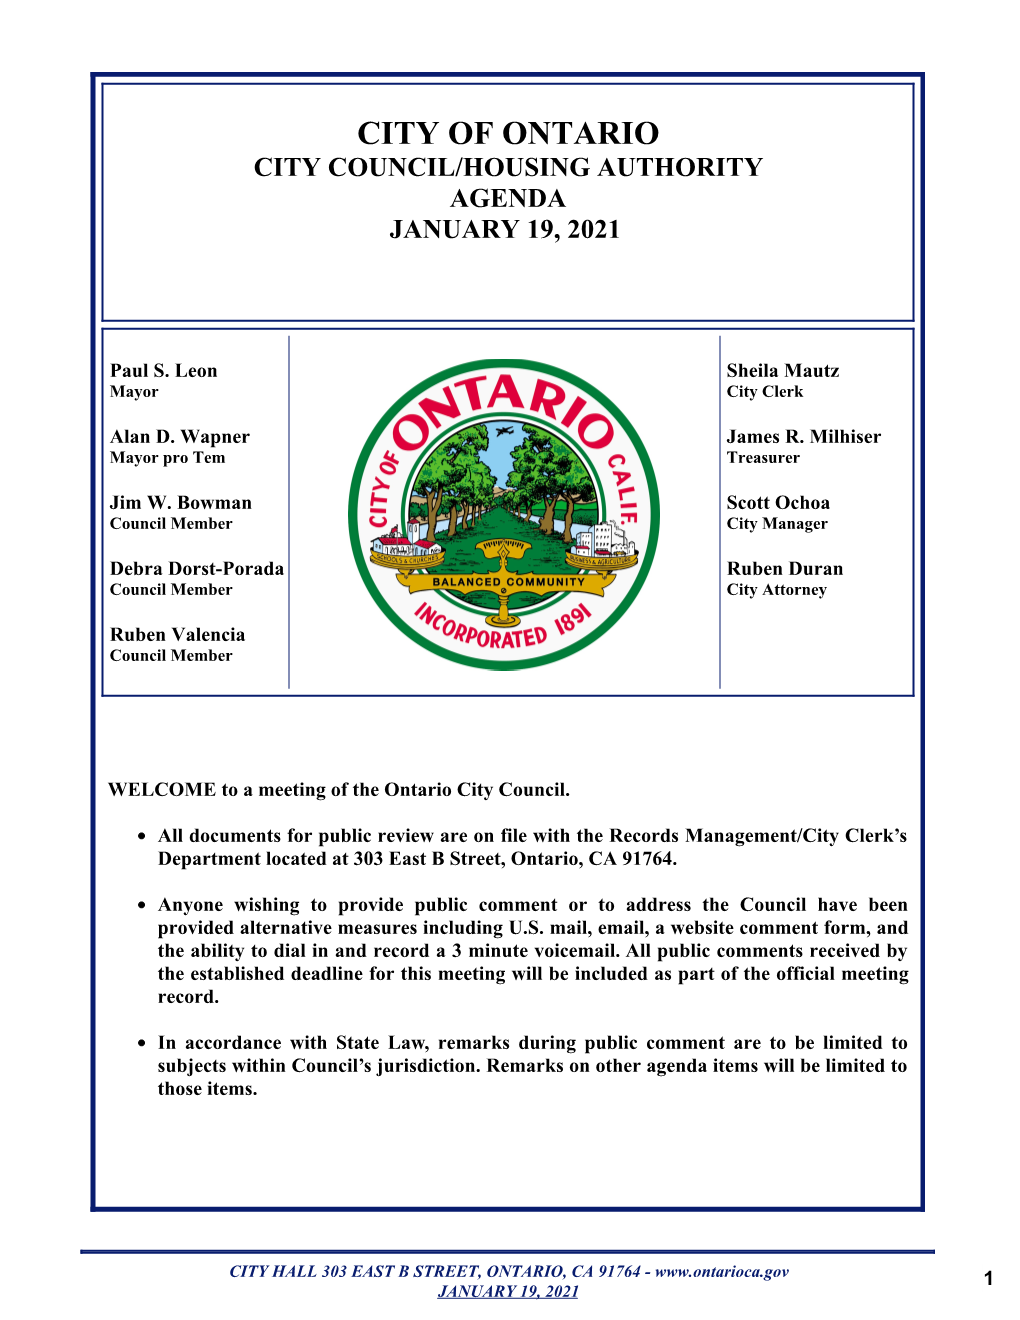 City of Ontario City Council/Housing Authority Agenda January 19, 2021